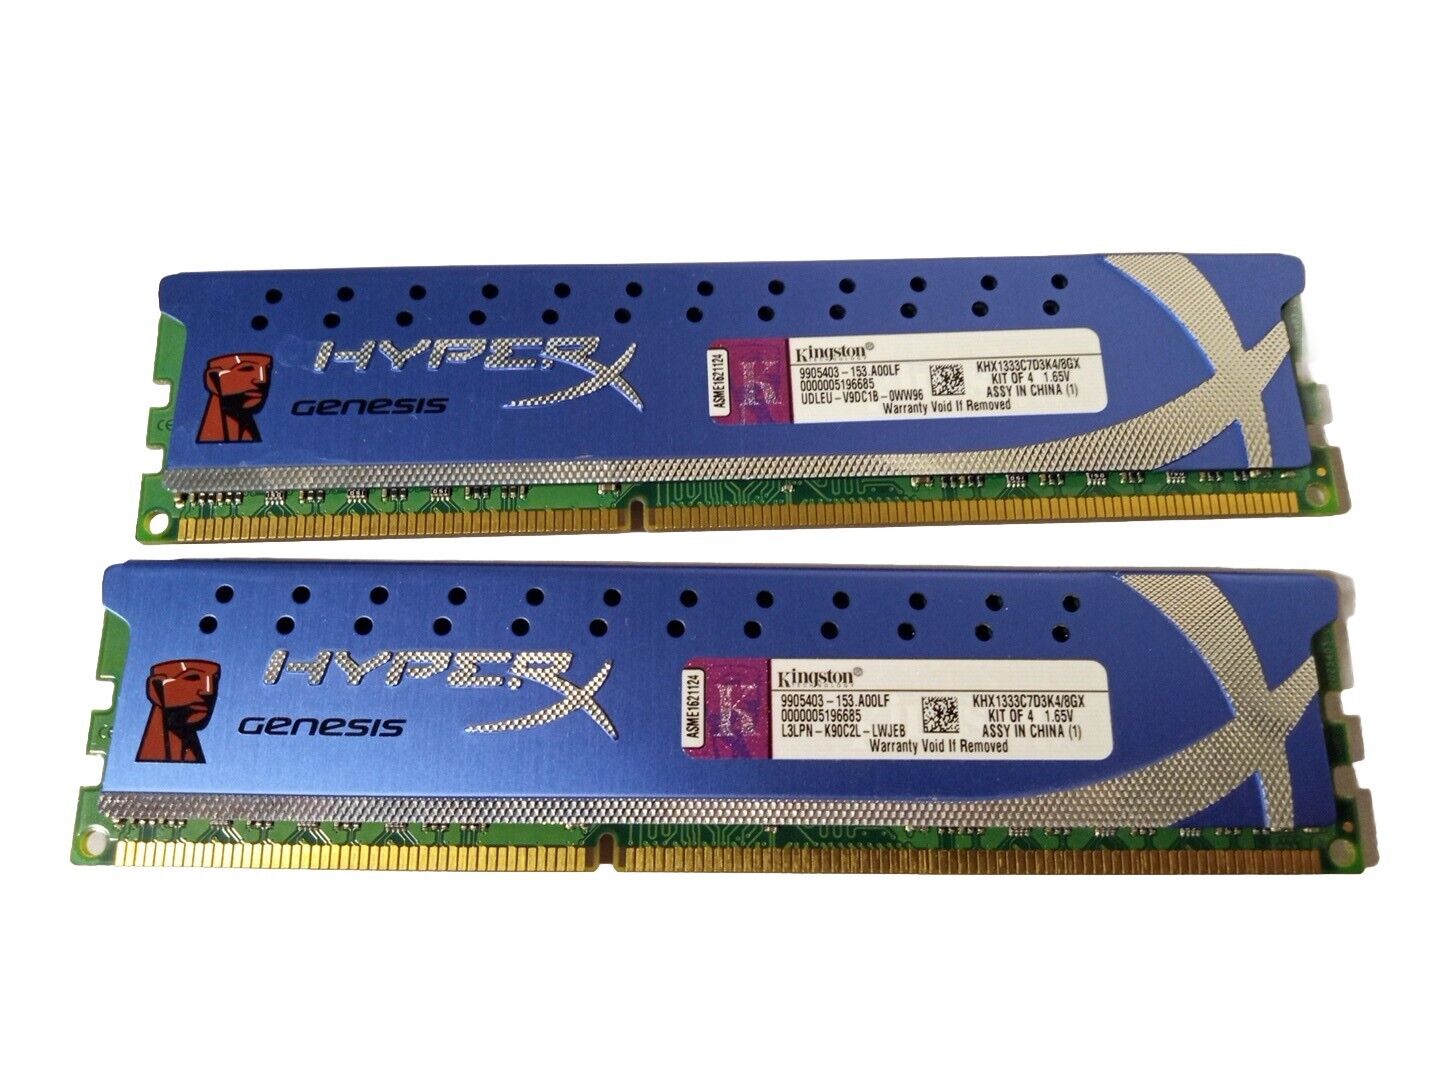 2x2GB  Kingston HyperX Genesis 1333MHz DDR3 RAM KHX1333C7D3K4/8GX